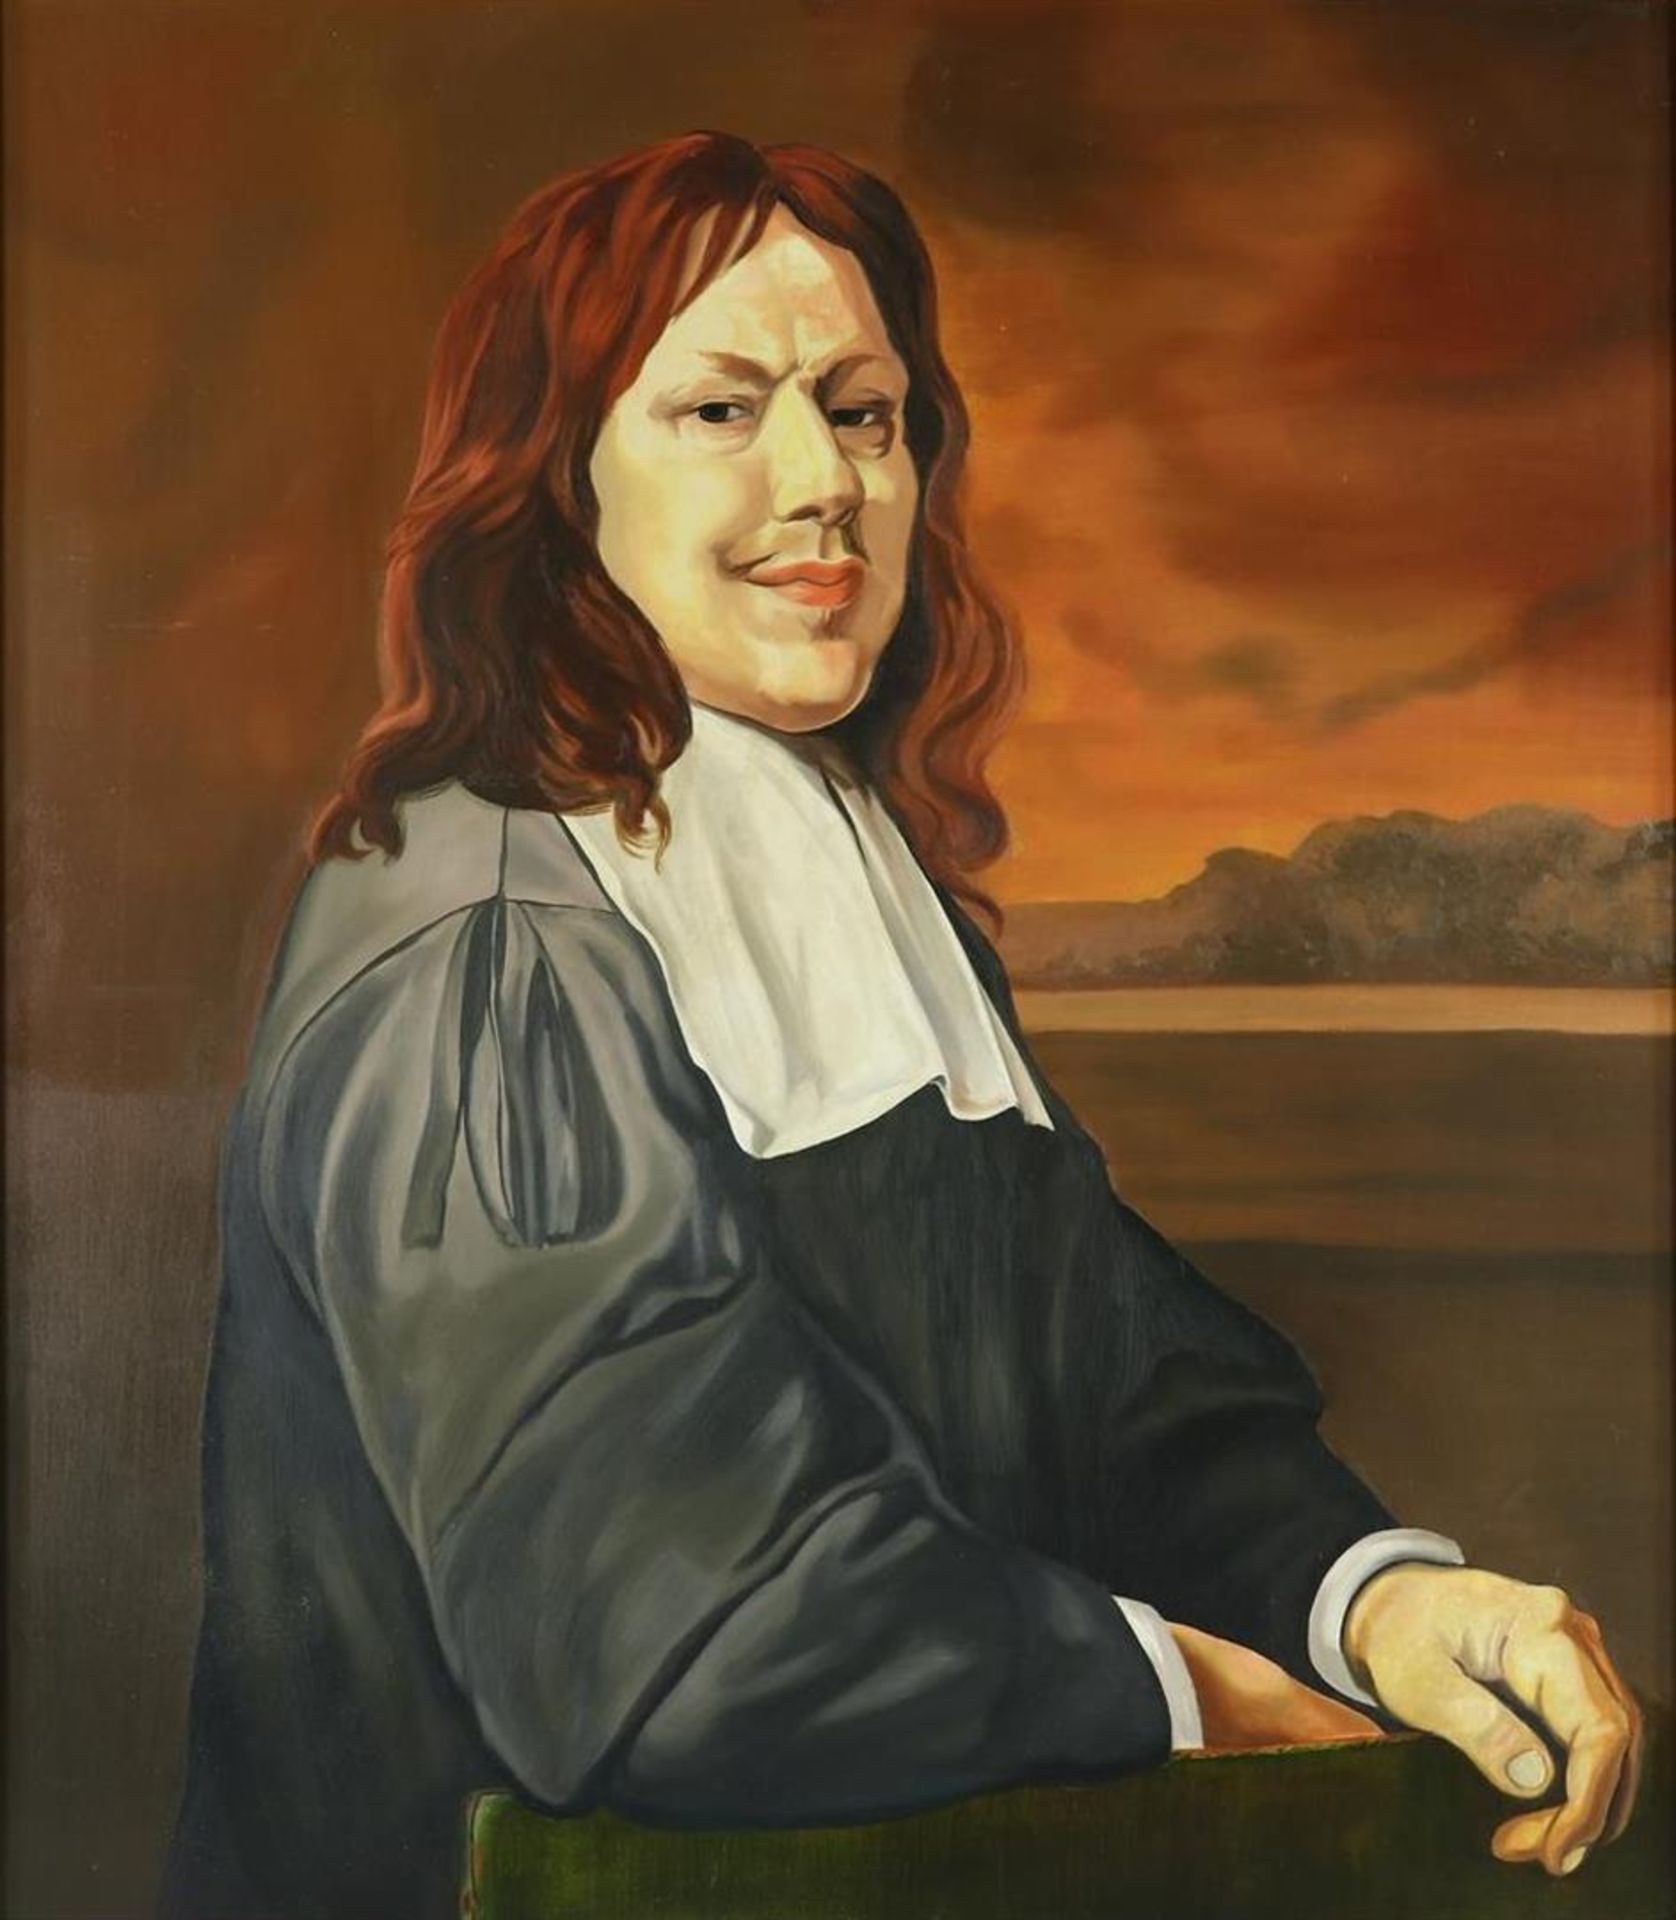 Painting portrait of gentleman, after Frans Hals